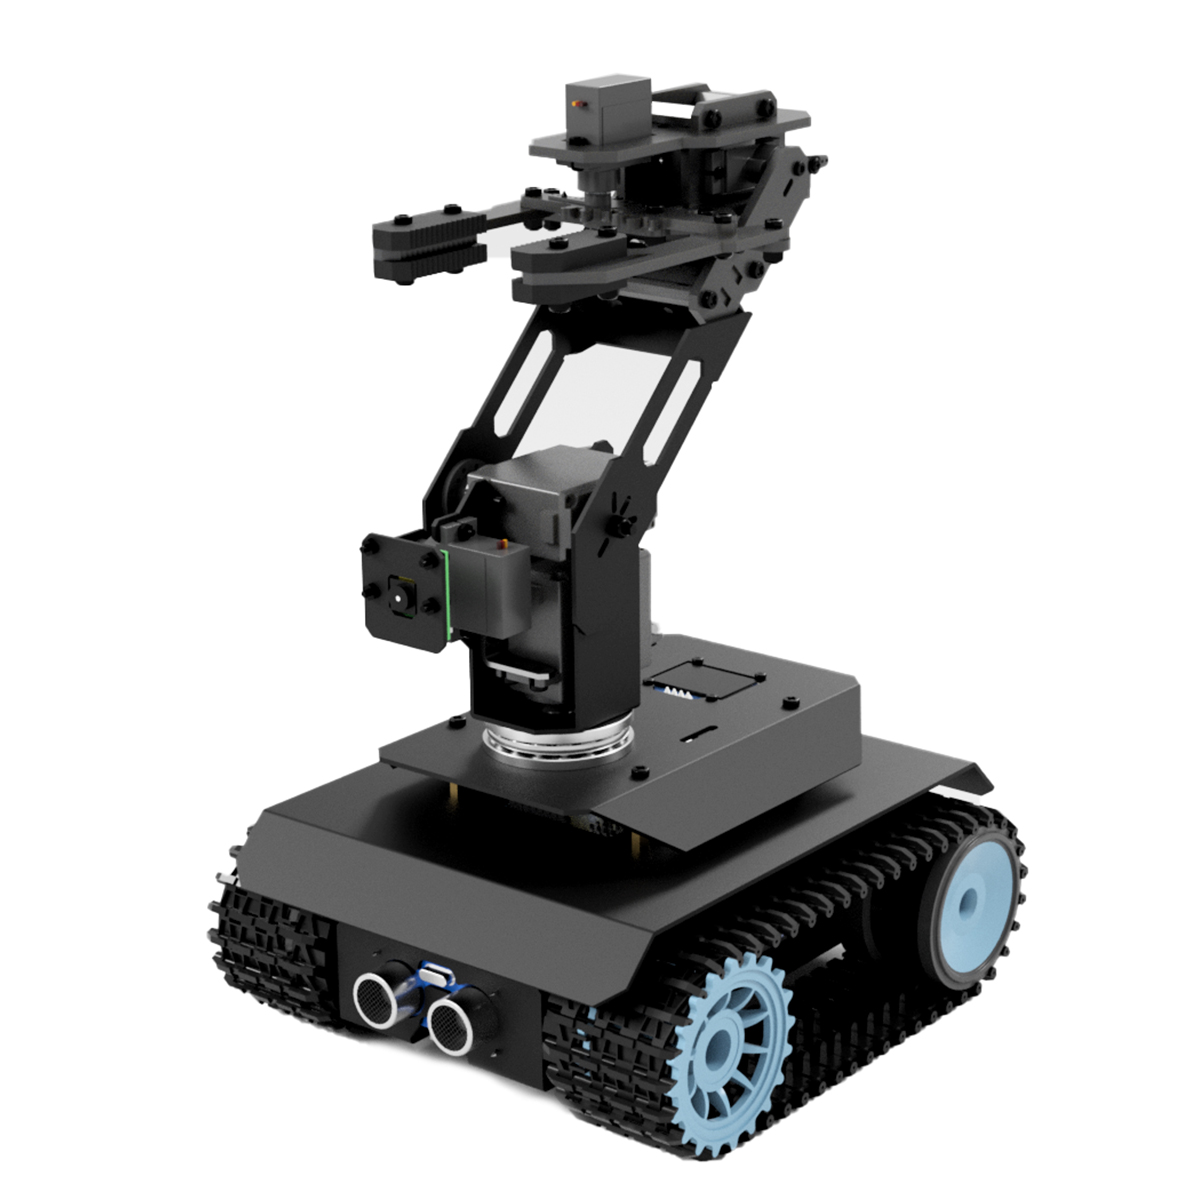 Adeept RaspTank Pro Robot Car Kit, WiFi Wireless Smart Robot for Raspberry Pi 4 3/3B+, 3-DOF Robotic Arm, OpenCV Target Tracking, Video Transmission